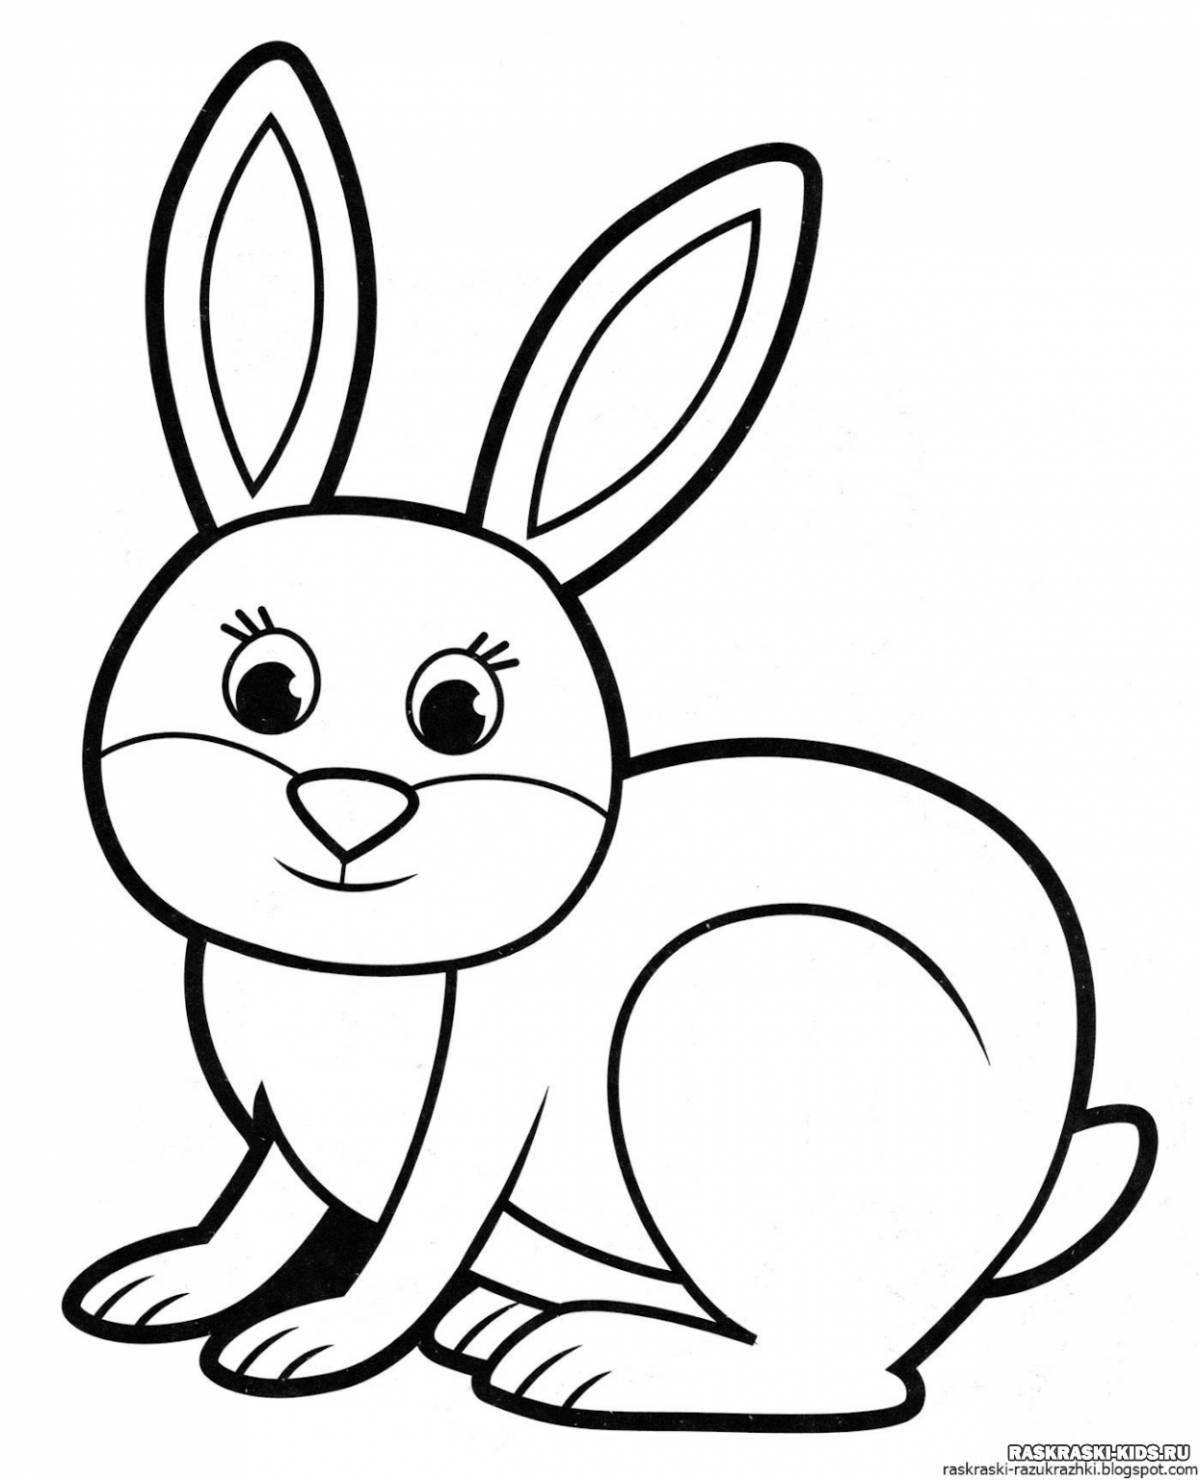 Cute bunny print coloring book